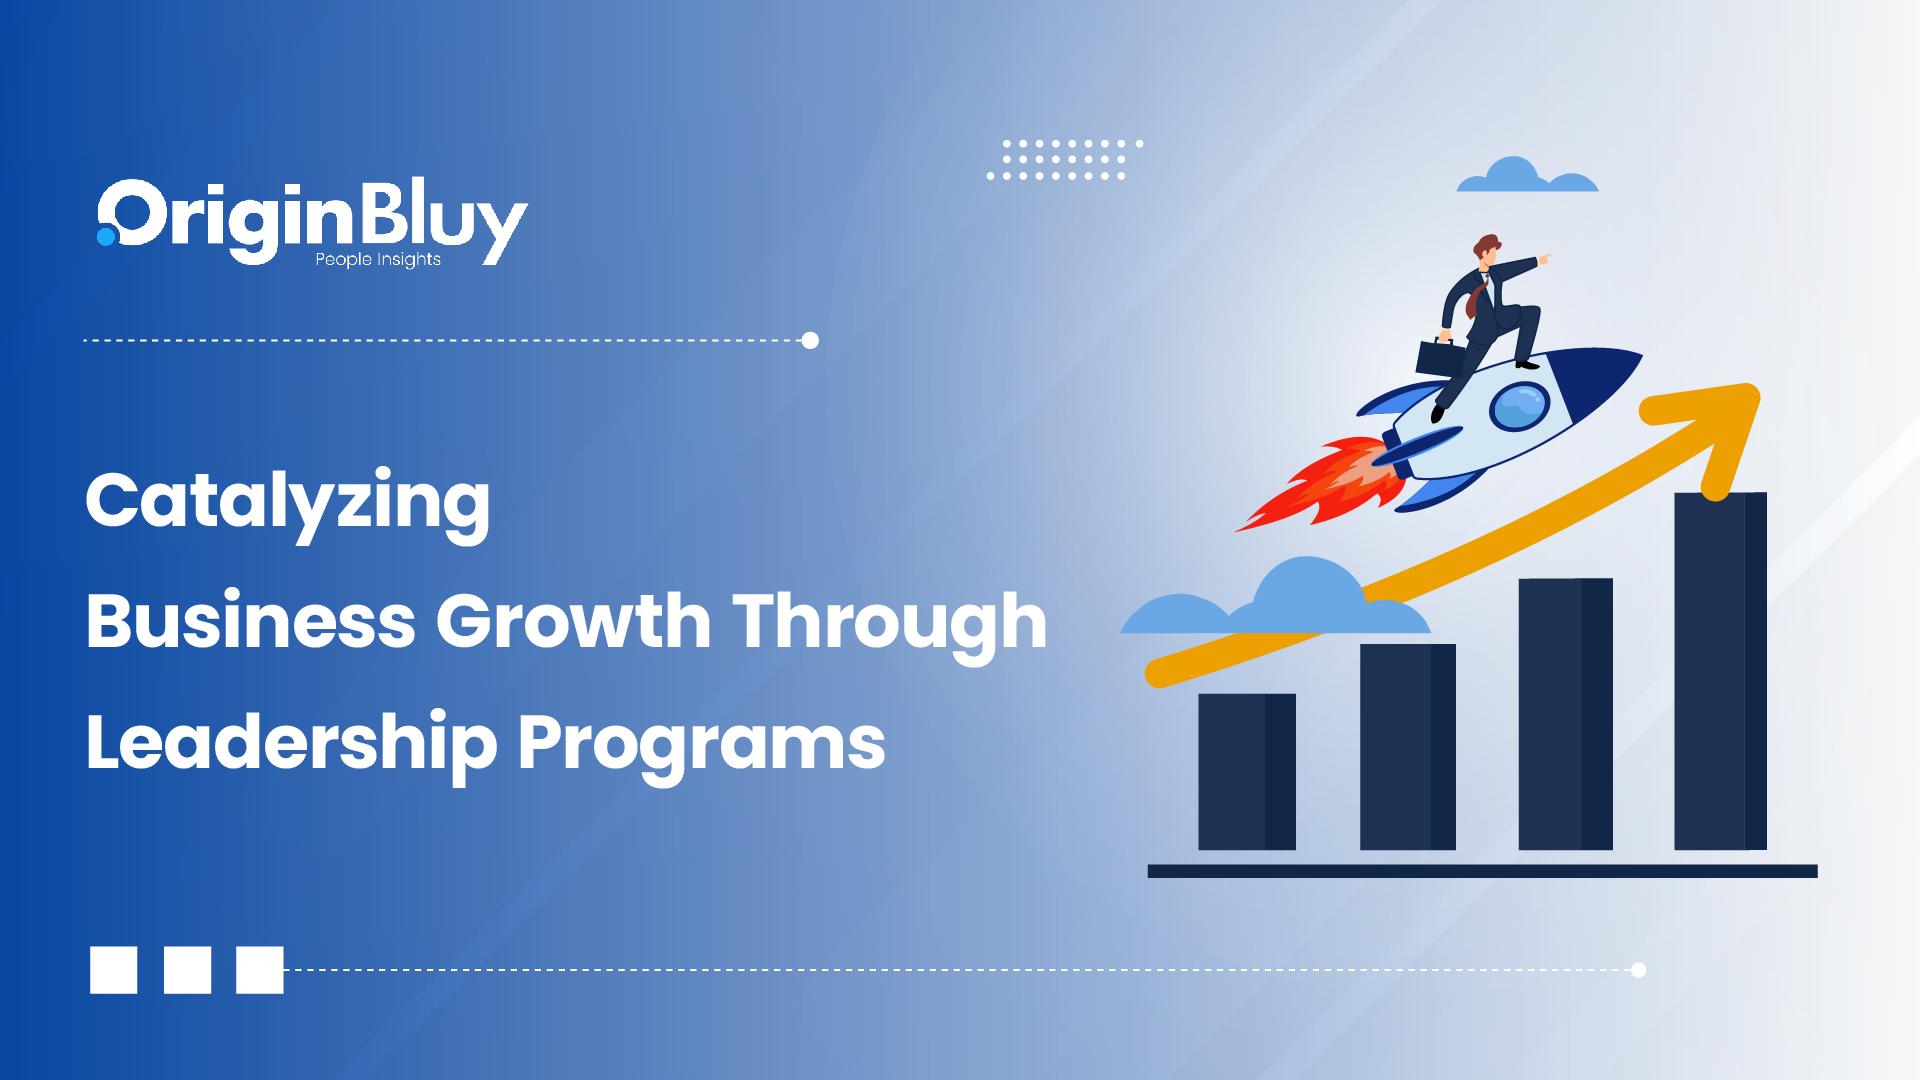 Catalyzing Business Growth Through Leadership Programs